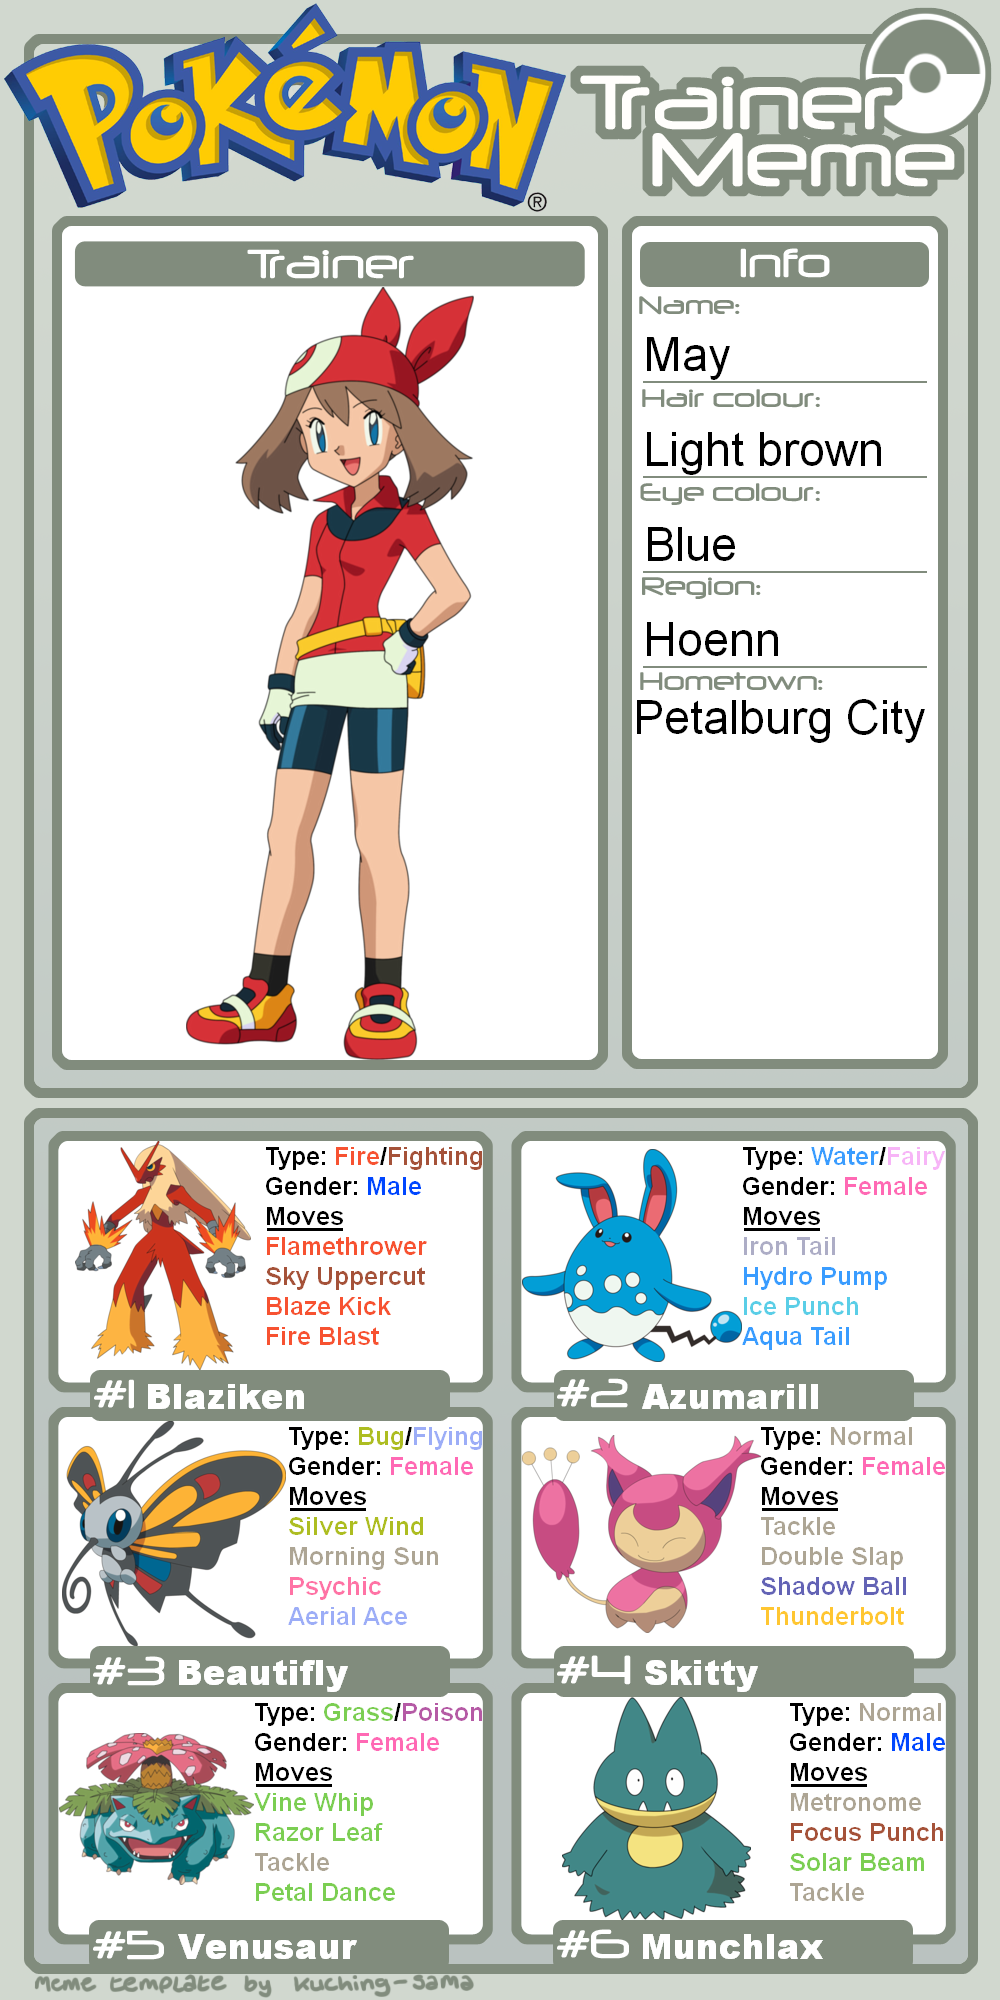 My Version of May's Anime Pokemon by BlueFlare6274 on DeviantArt